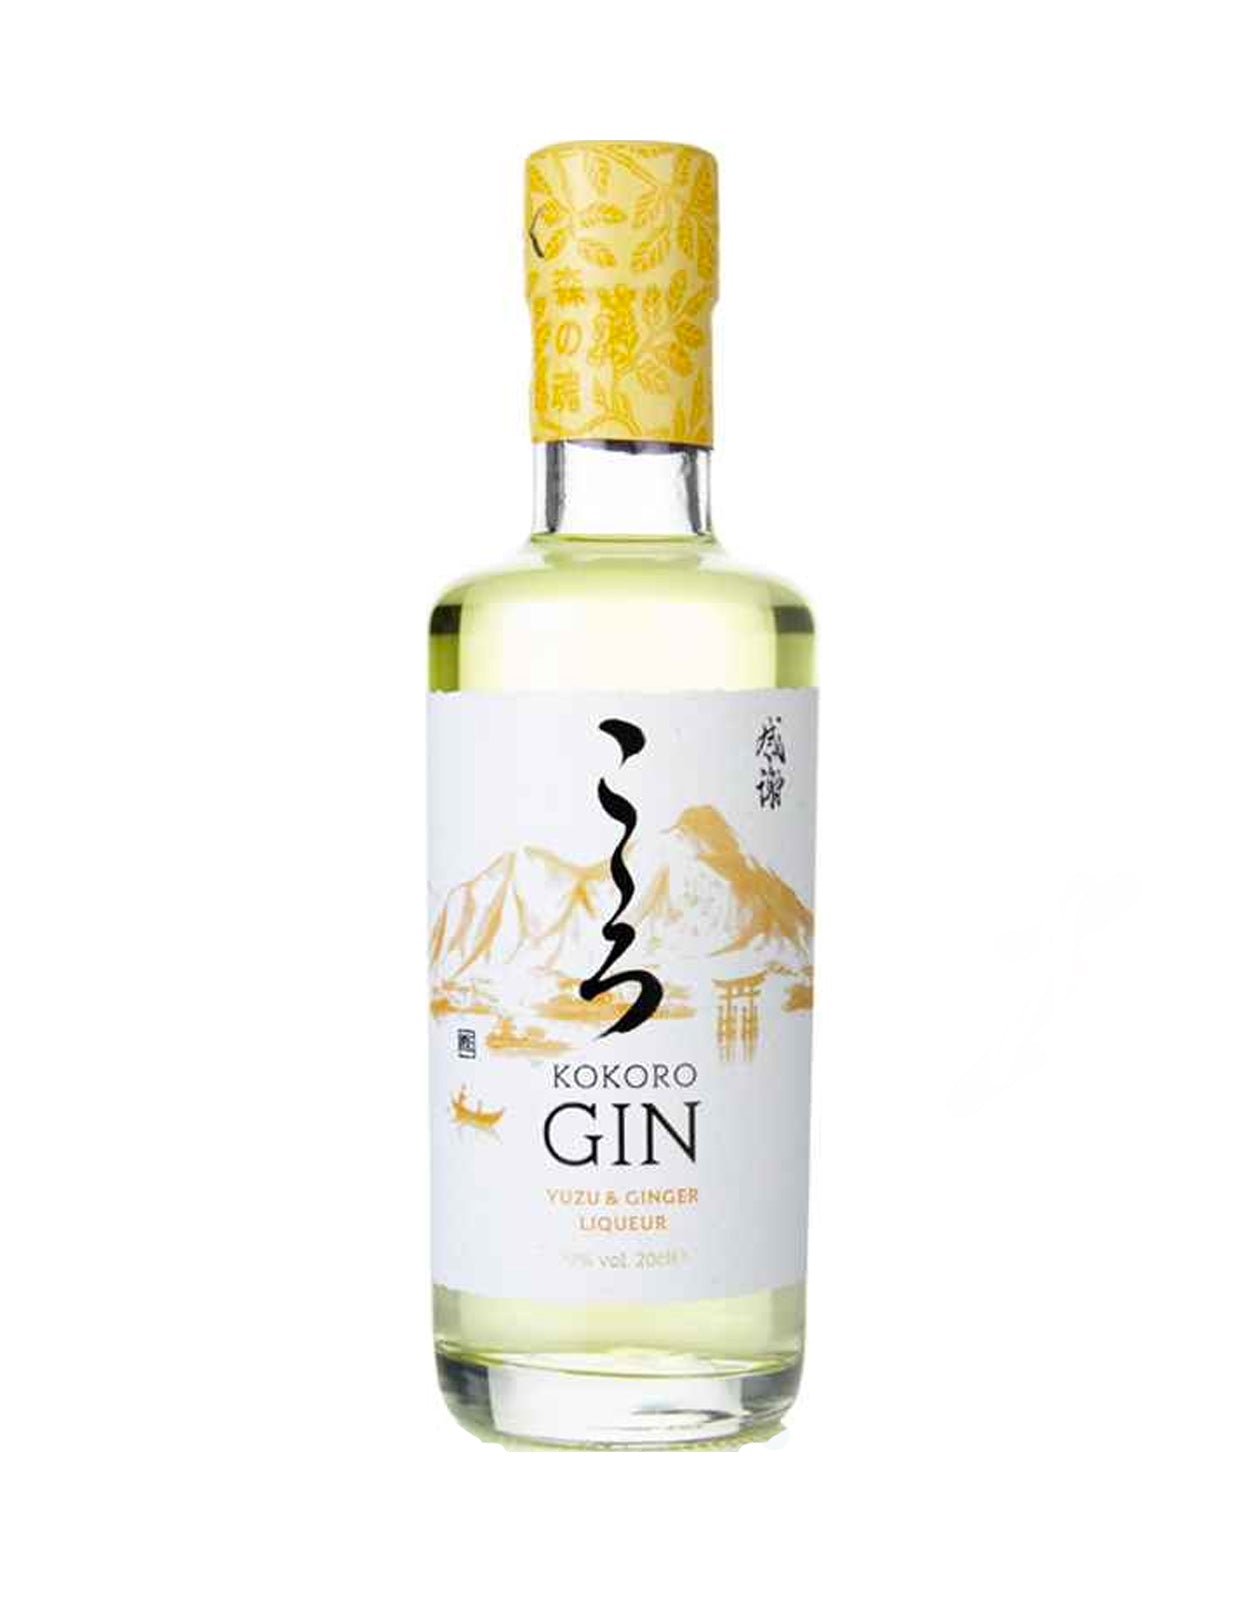 Kokoro Yuzu & Ginger Liquor - 500 ml